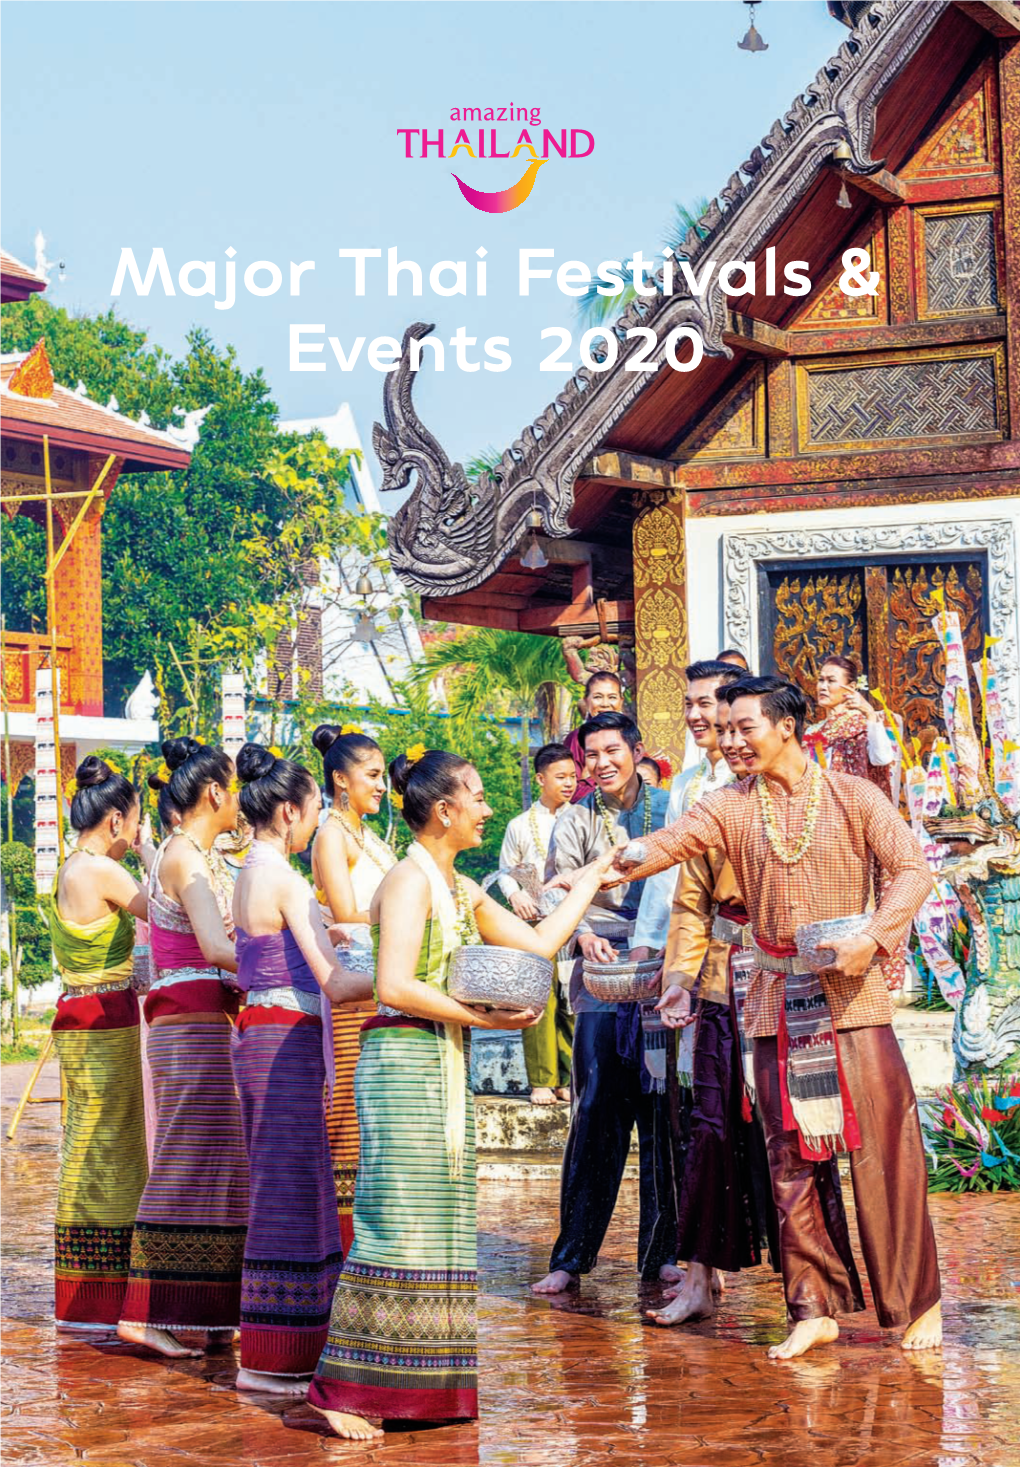 Major Thai Festivals & Events 2020